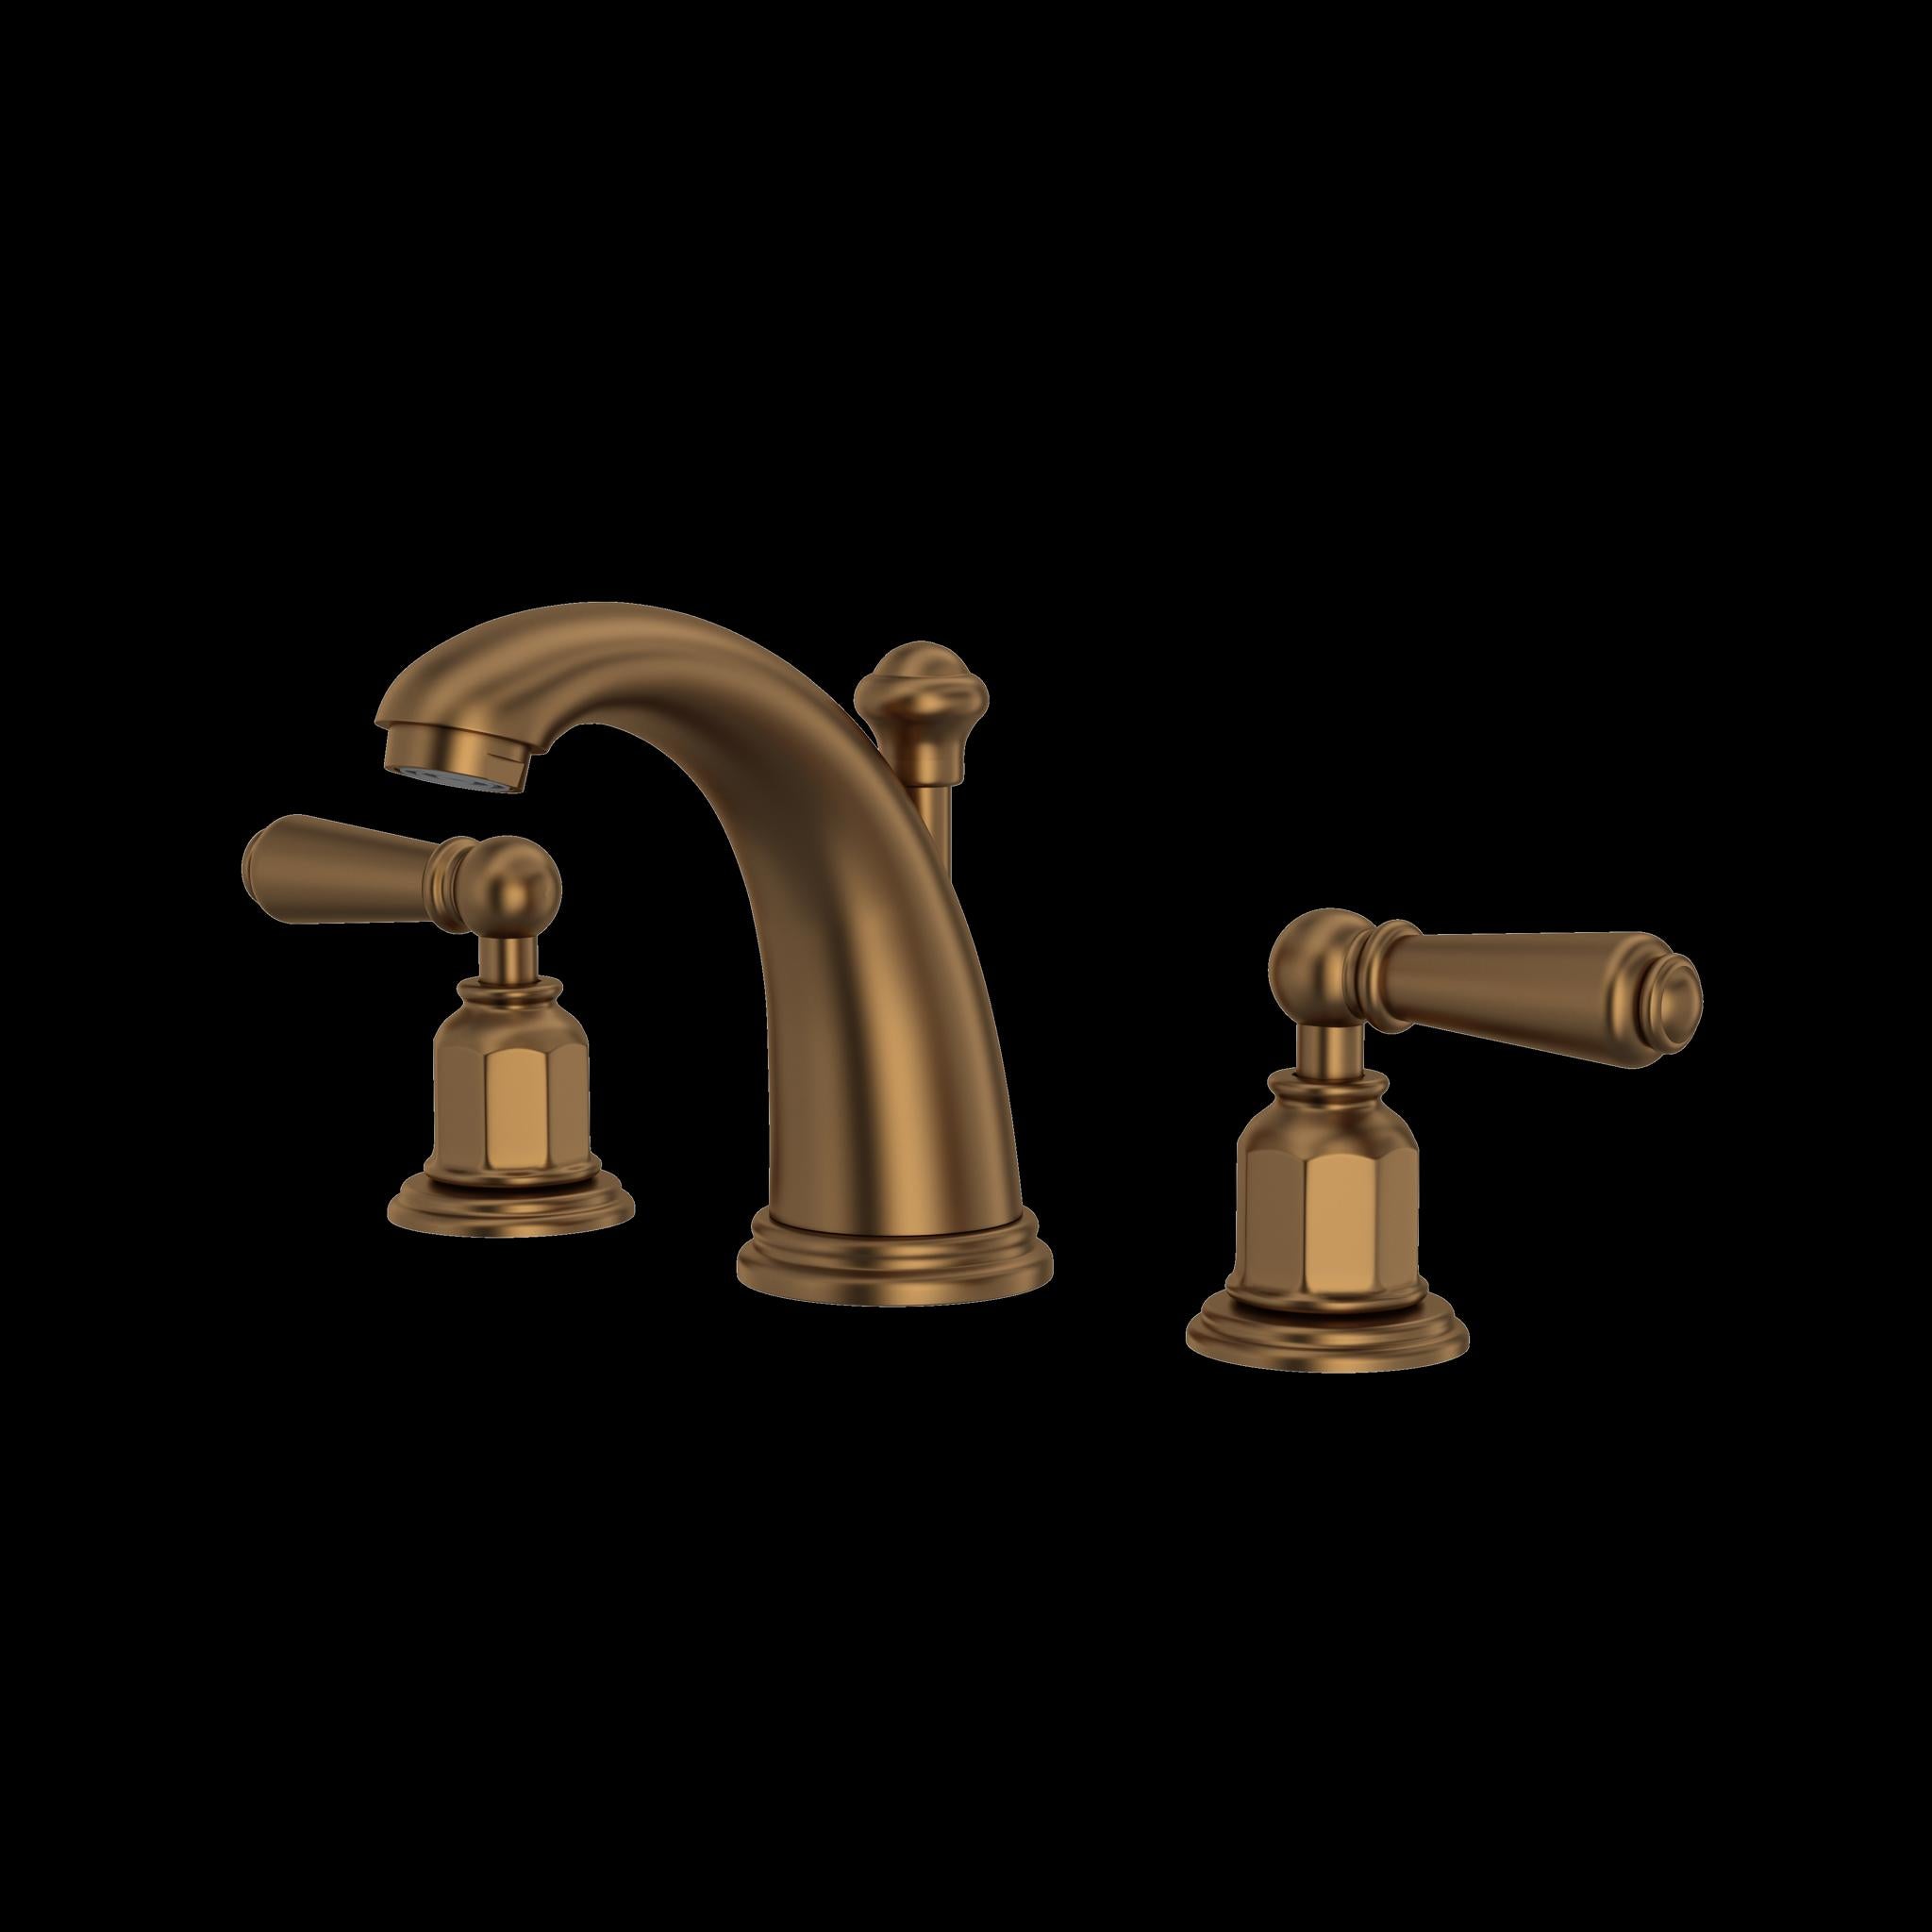 Perrin & Rowe U.3760 Edwardian Widespread Lavatory Faucet